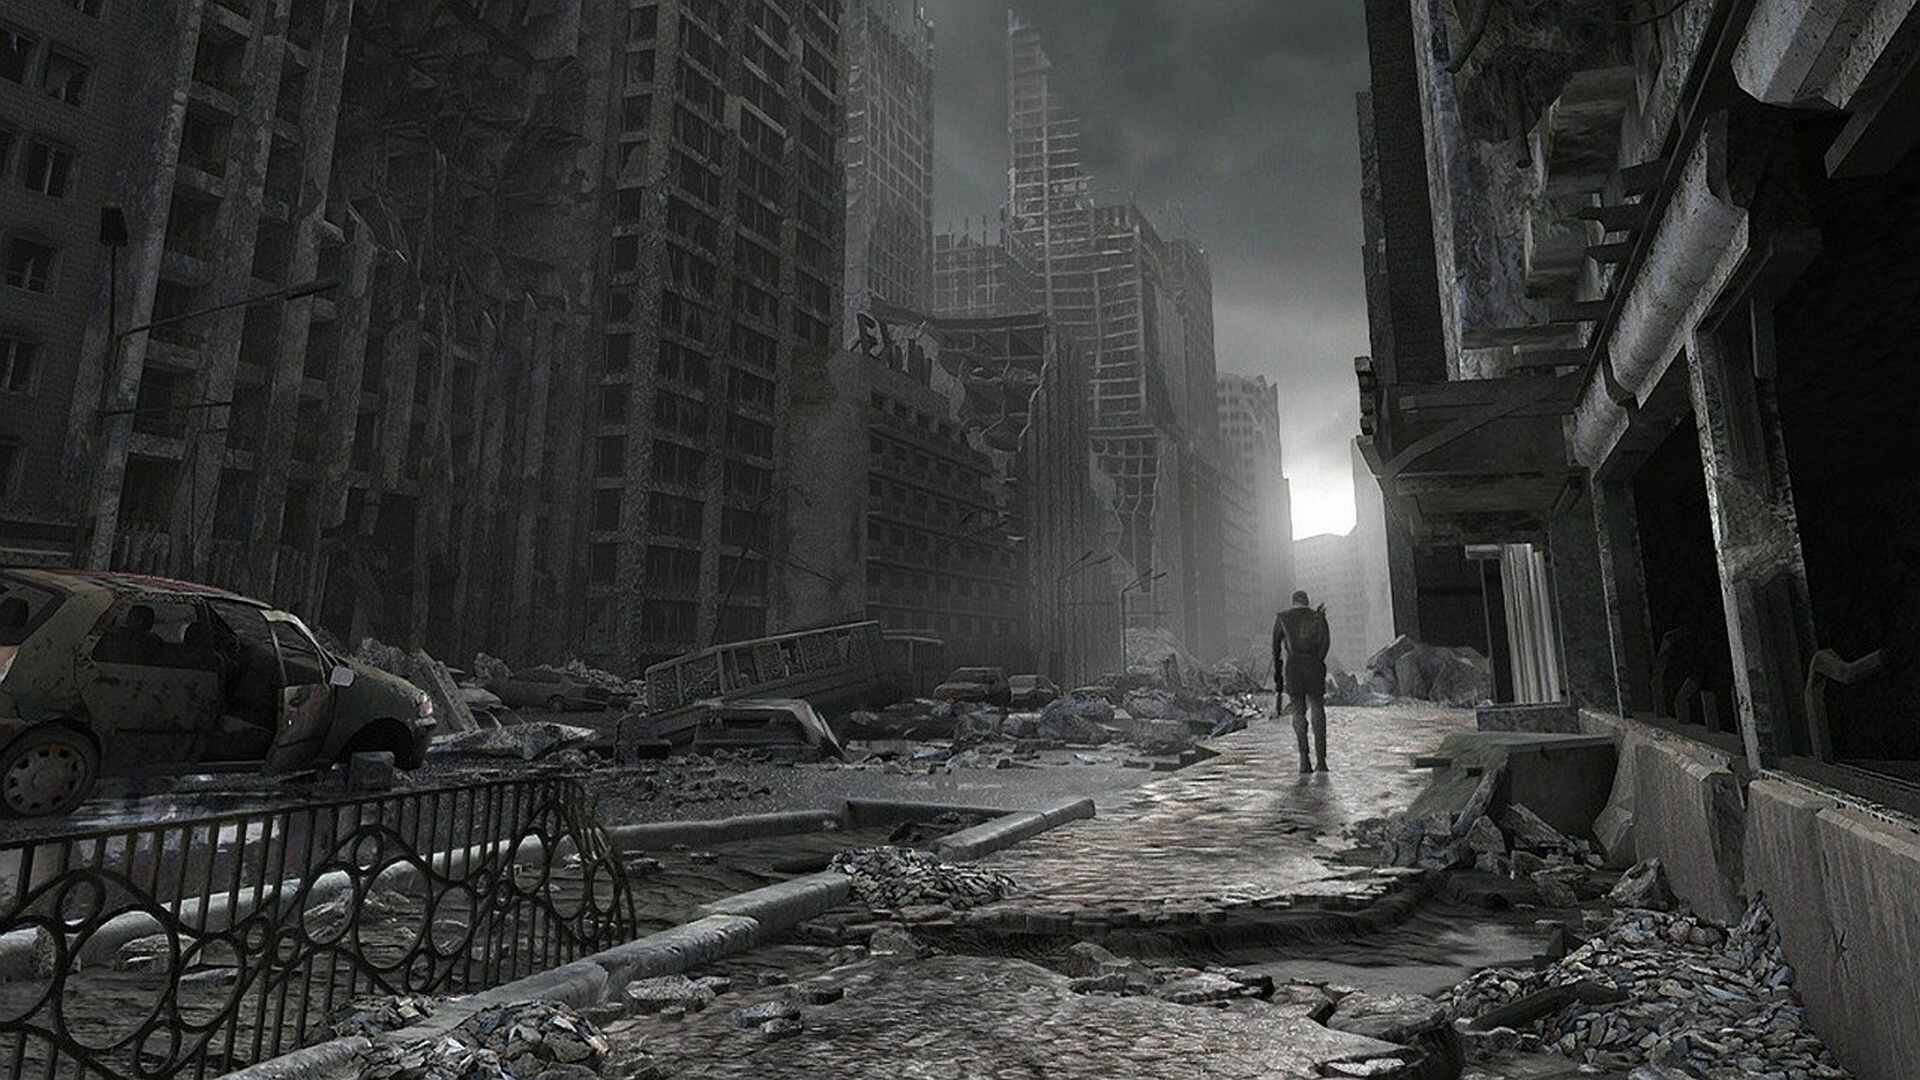 Post-apocalypse: Derelict building, Survivor struggling to stay alive. 1920x1080 Full HD Wallpaper.